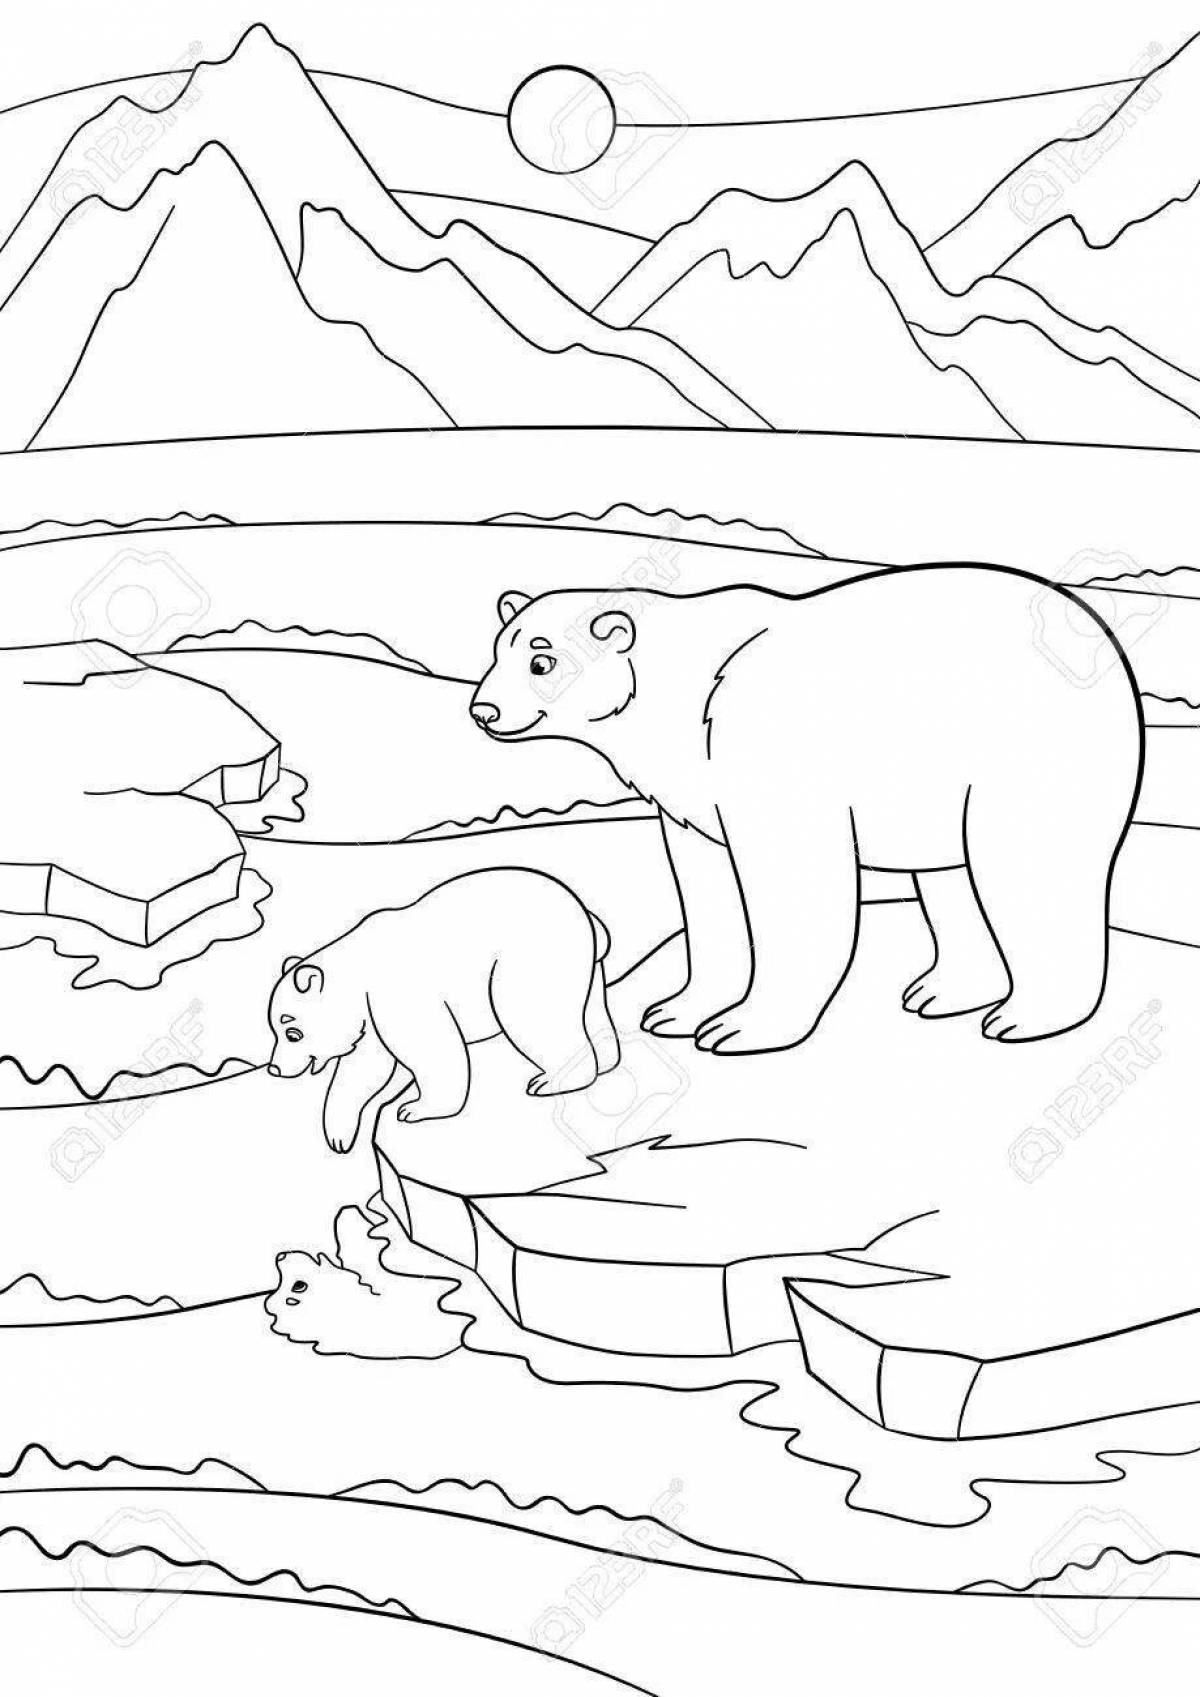 Coloring page bizarre animals of the far north